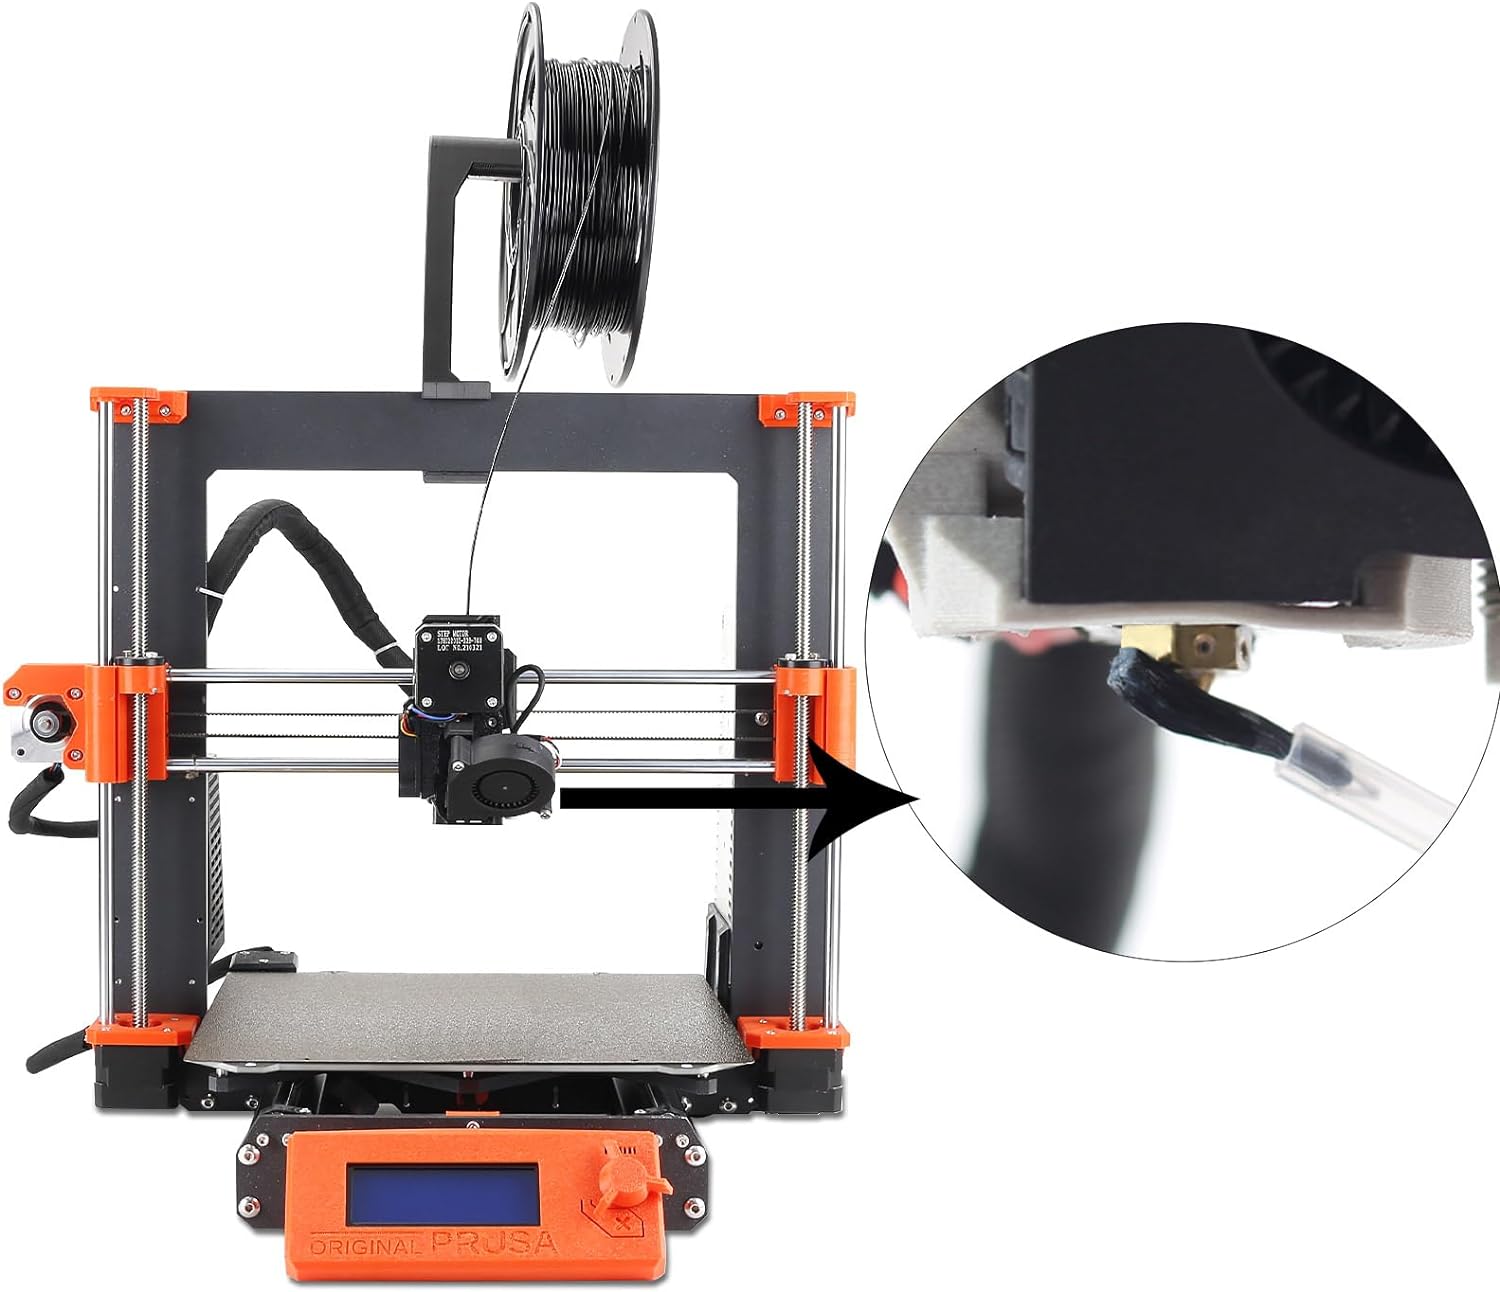 imdinnogo-3d-printer-accessories-prevents-filament-buildup-on-nozzle-15ml-15cc-for-3d-printing-project-improve-print-qua-2 Imdinnogo 3D Printer Accessories Prevents Filament Buildup on Nozzle Review